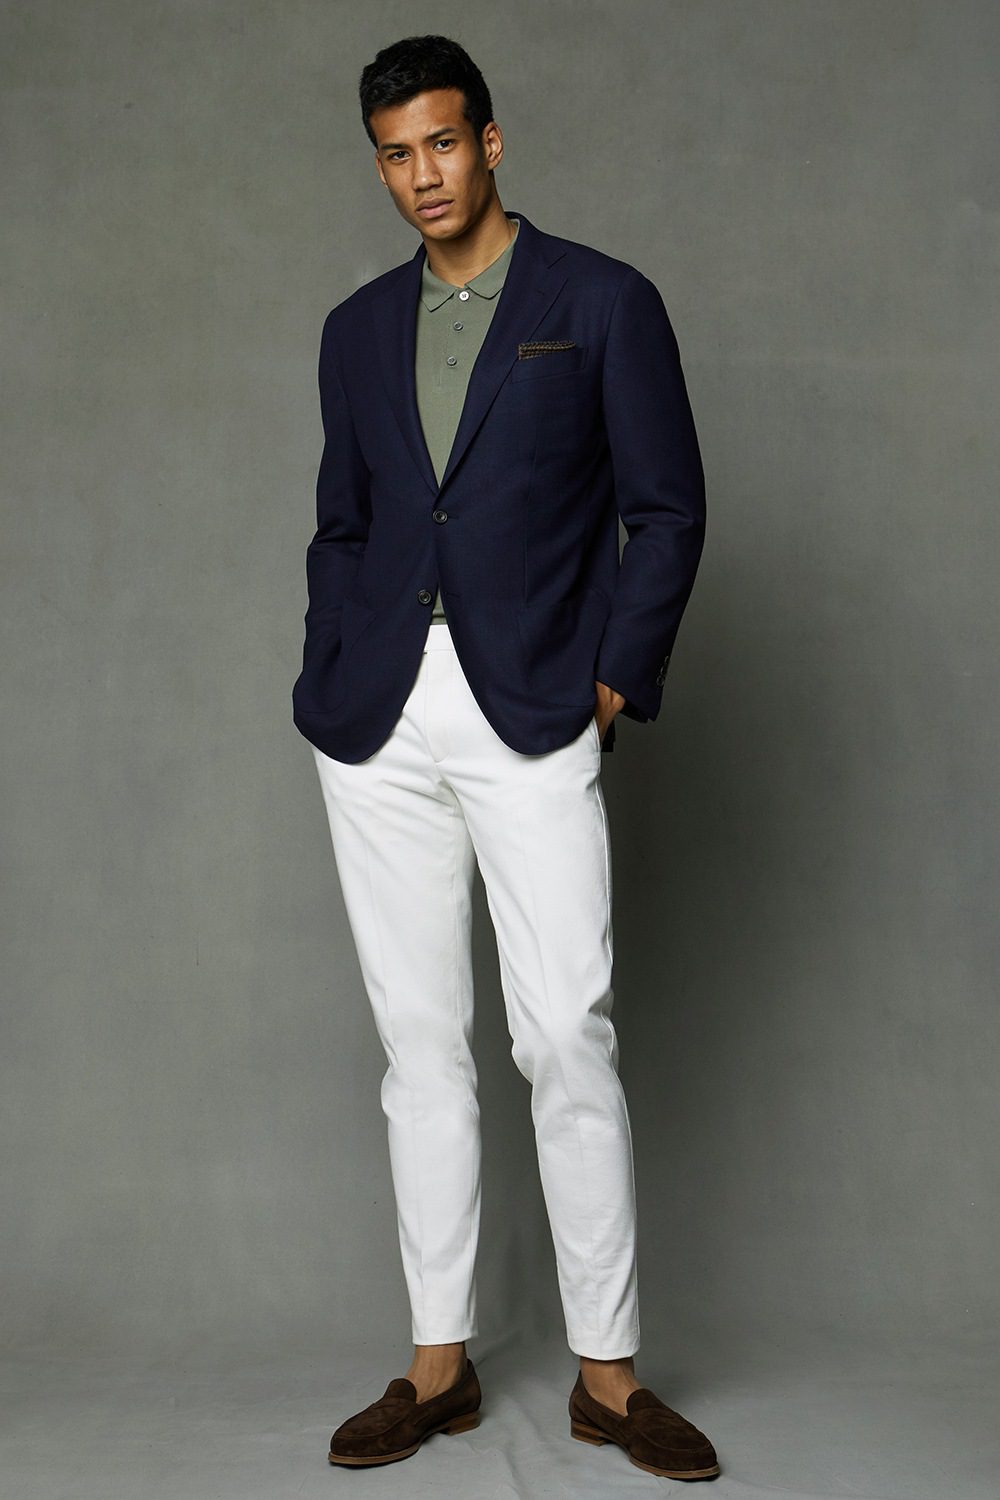 Navy blue blazer with white pants